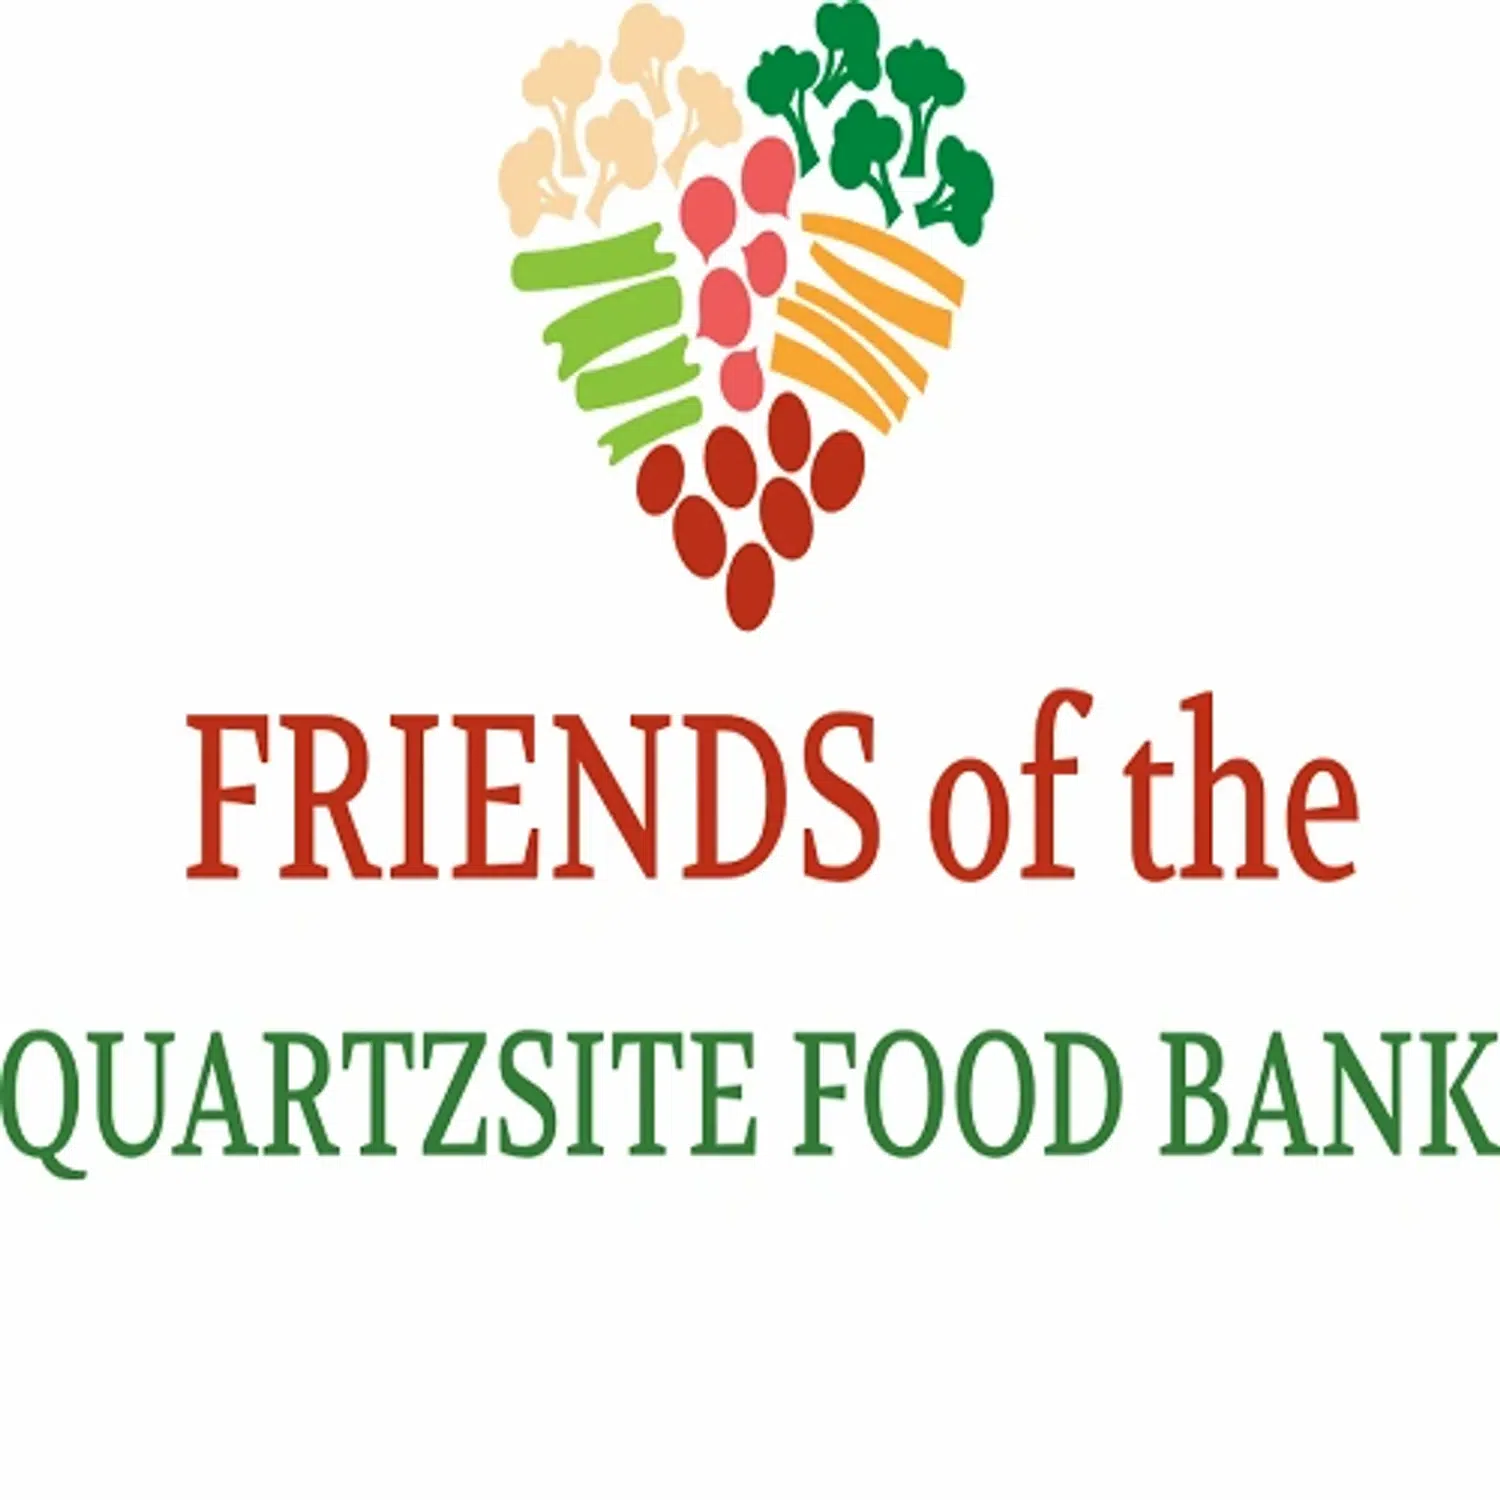 Friends of the Quartzsite Food Bank